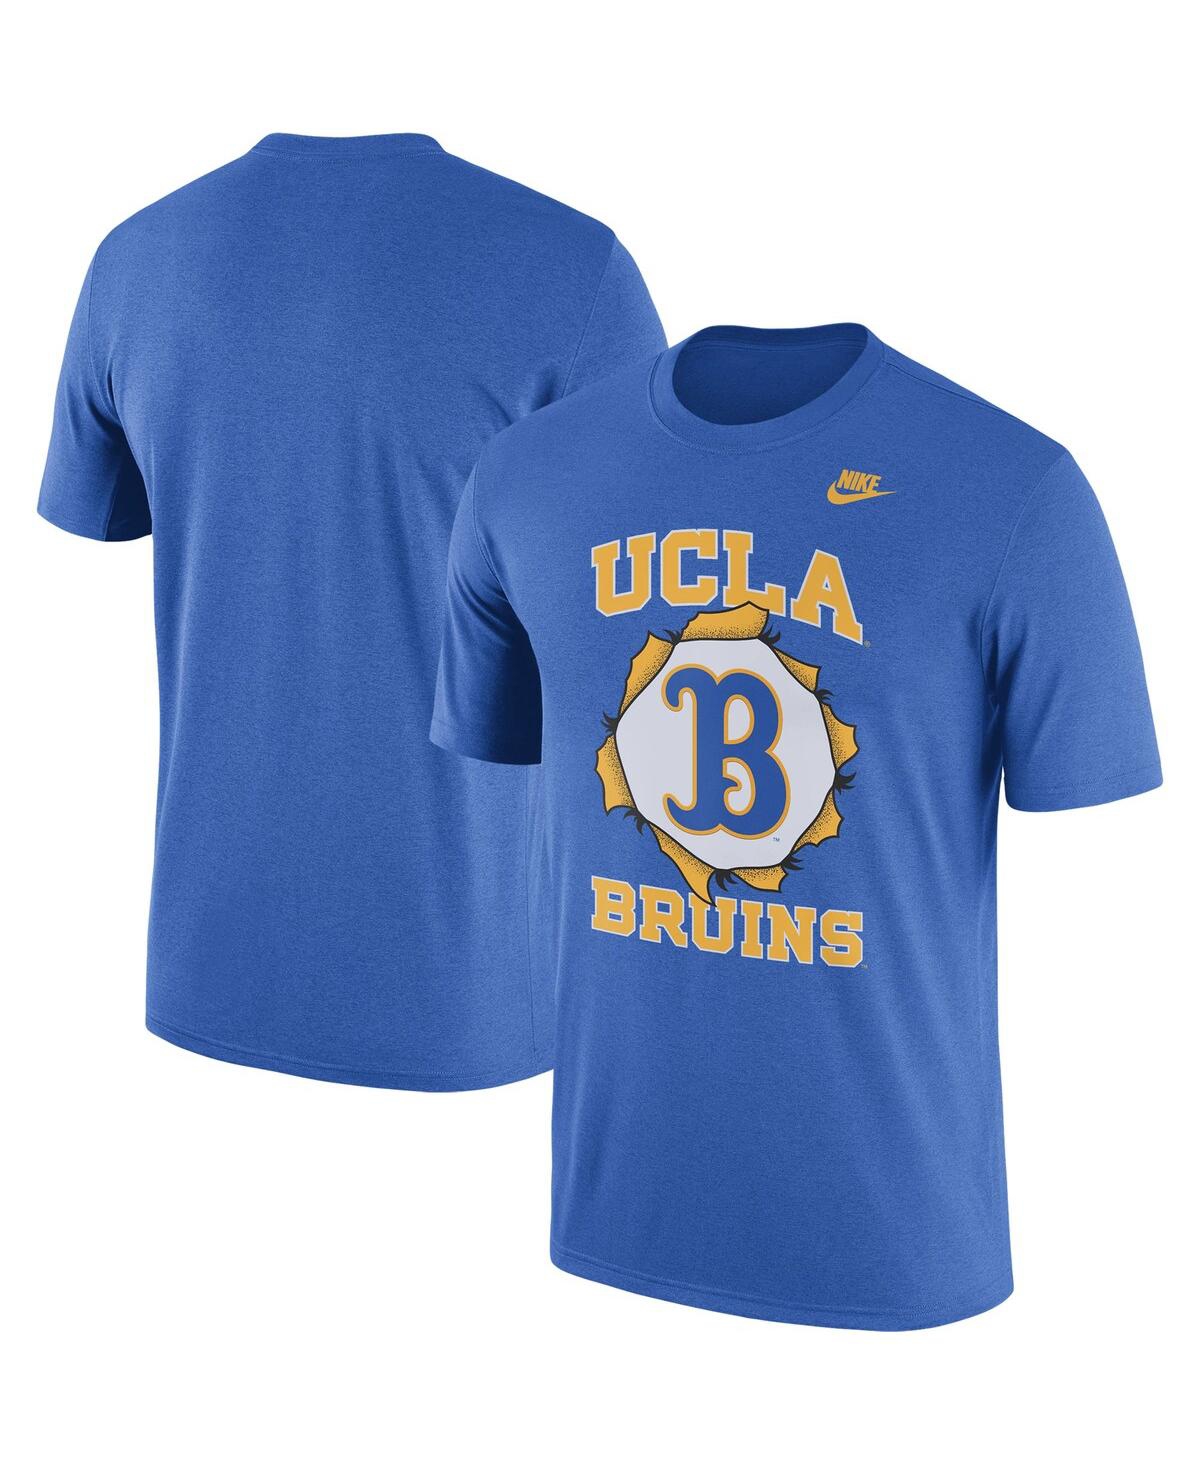 Nike Men's  Blue Ucla Bruins Campus Back To School T-shirt